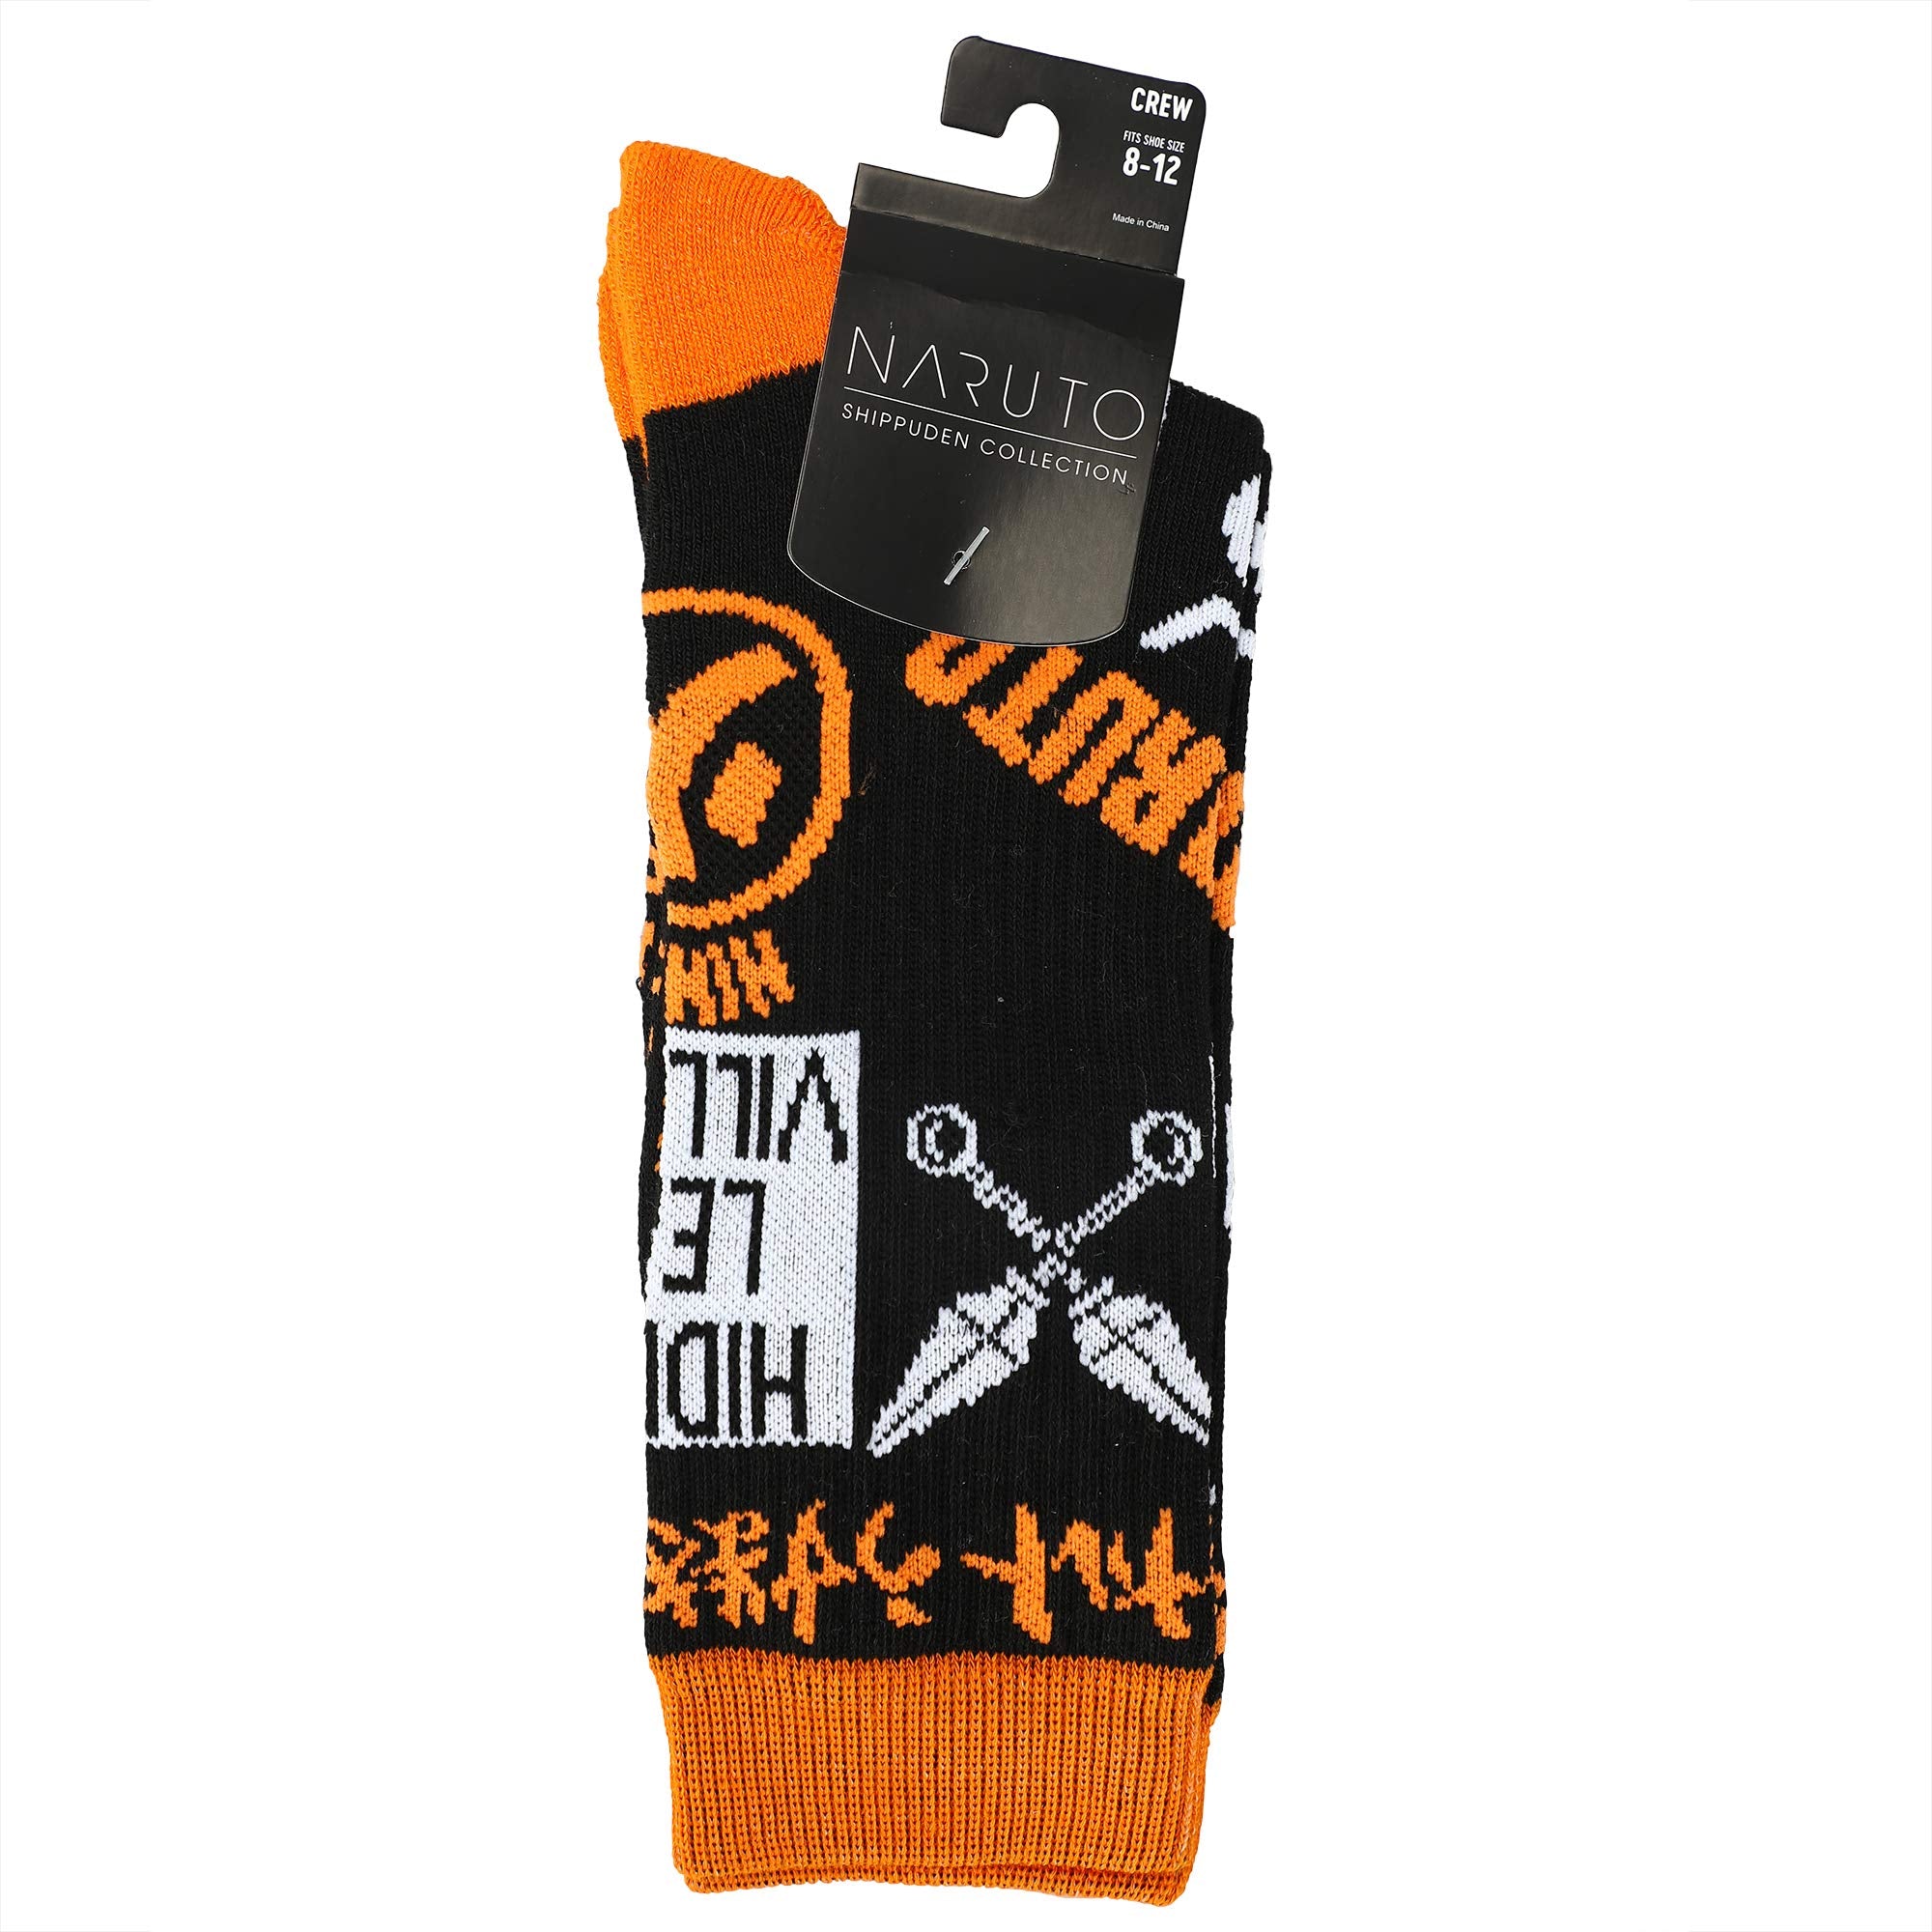 Naruto Clan Symbols Crew Socks